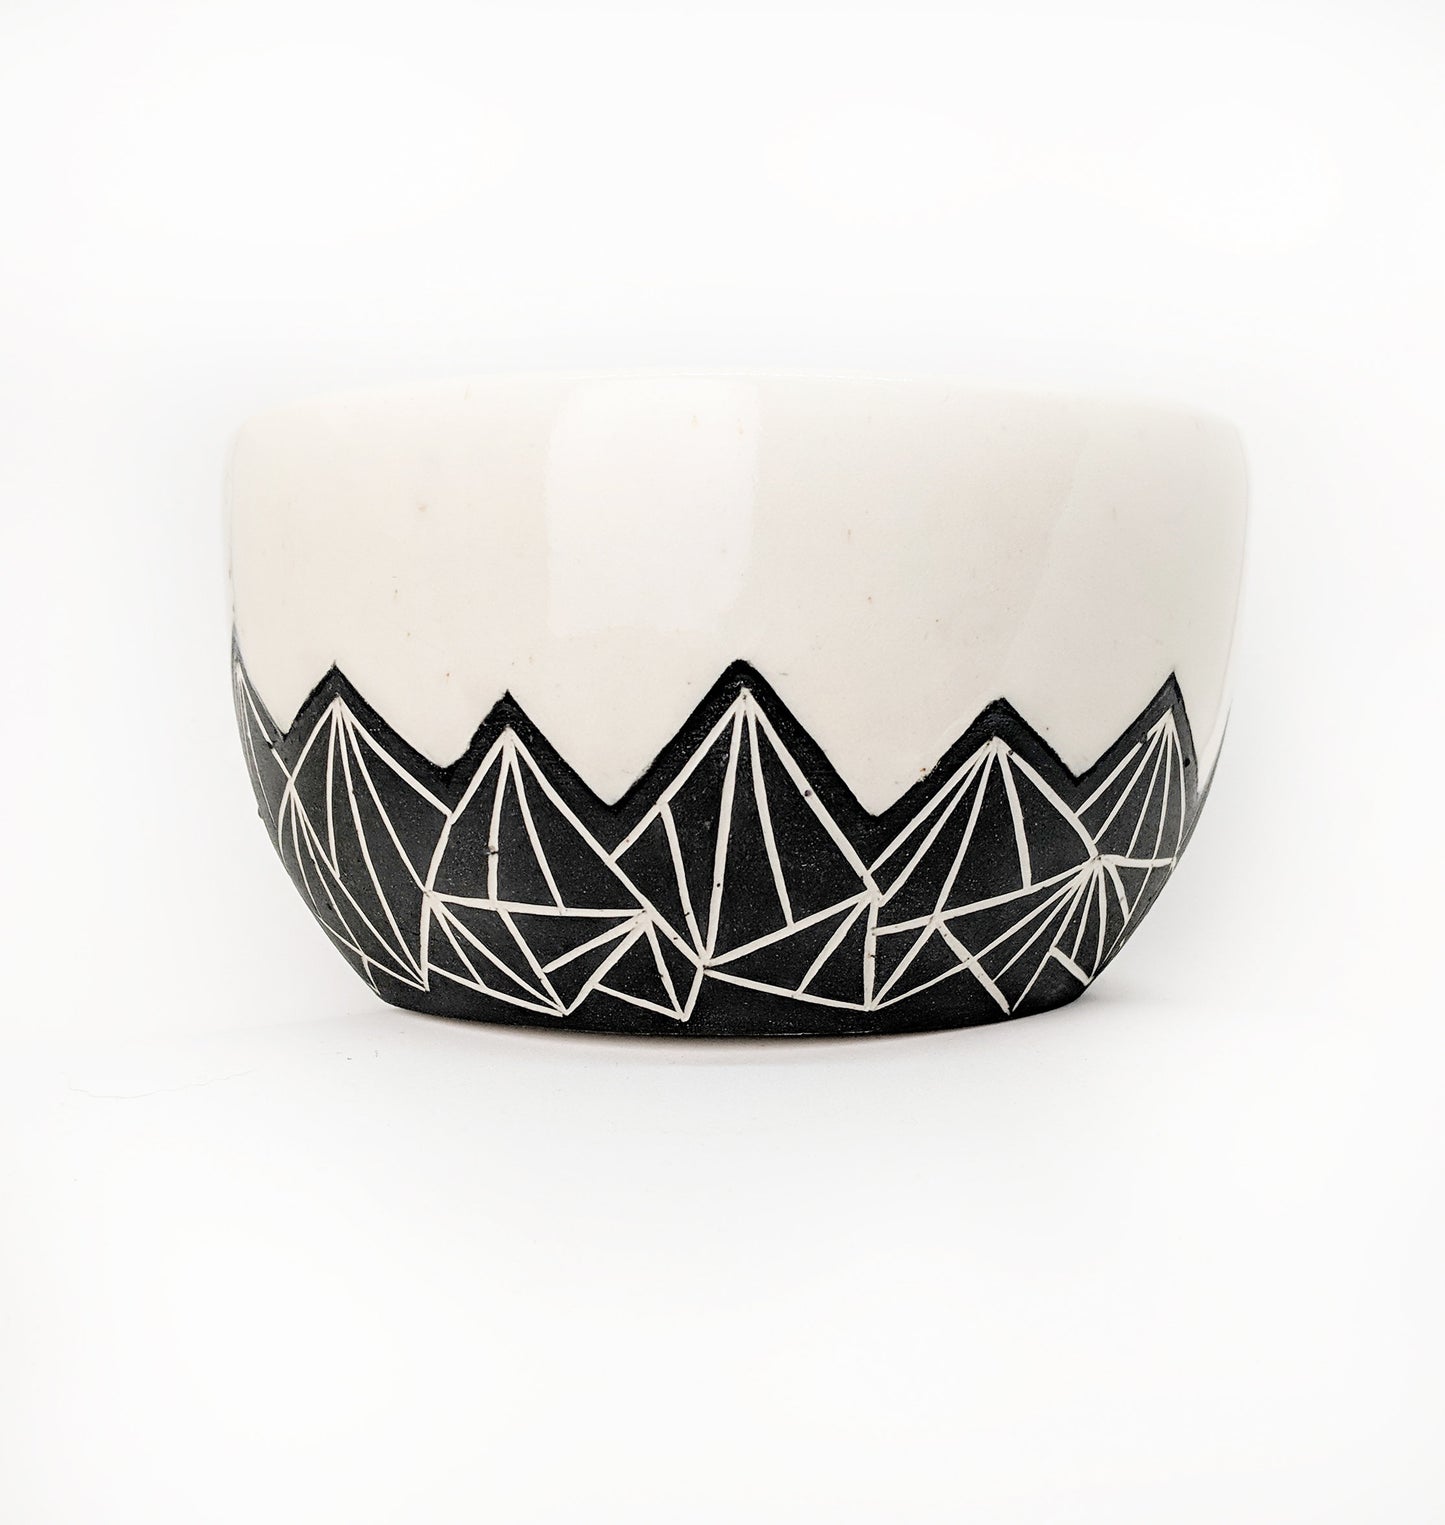 Geometric Mountain Bowl - White and Black